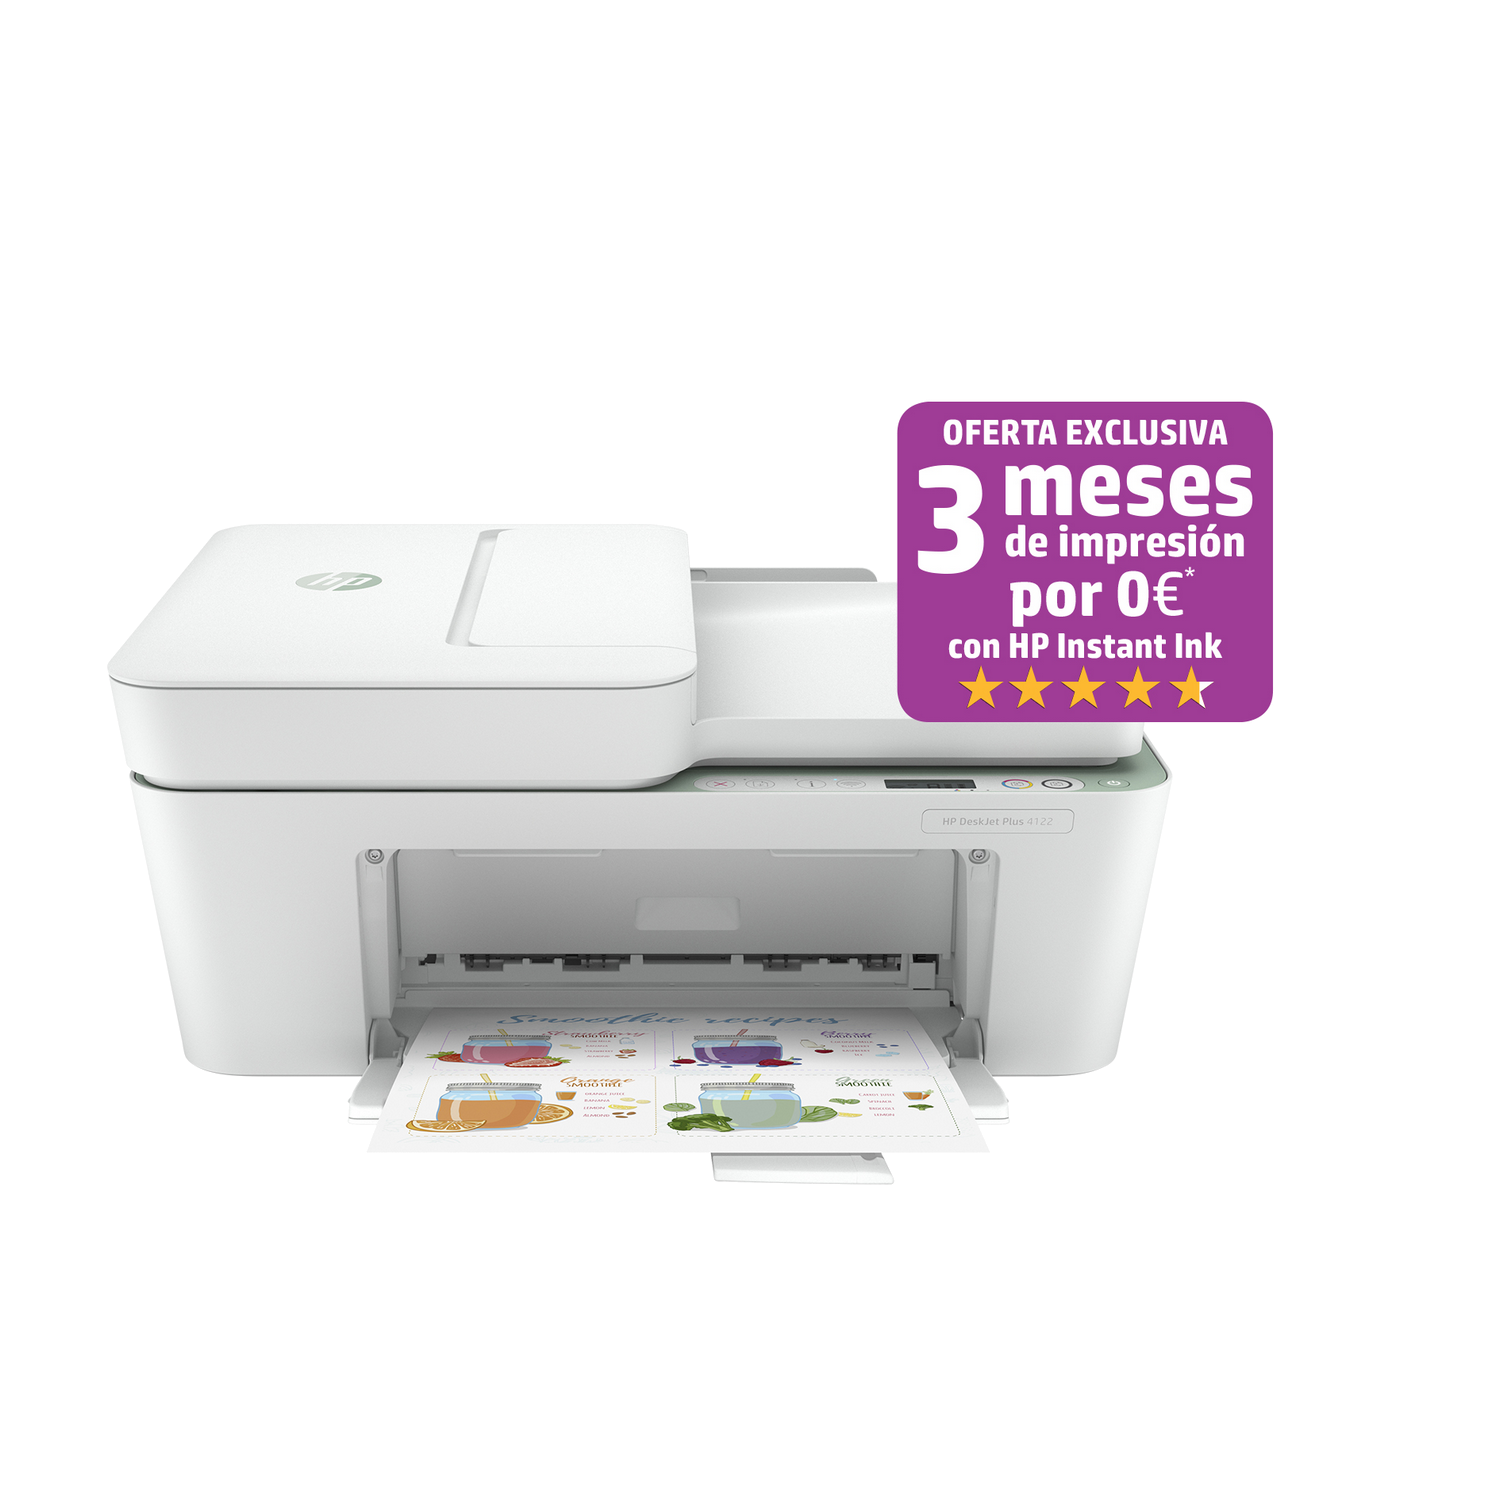 Hp Deskjet Plus 4120 imprimeescaneacopiafax impresora color 5.5 ppm wifi compatible con instant ink tinta 1200x1200ppp p4120 ddr1 512 mb blanco a0032261 3xv14b a4 escanea copia fax 2.0 3